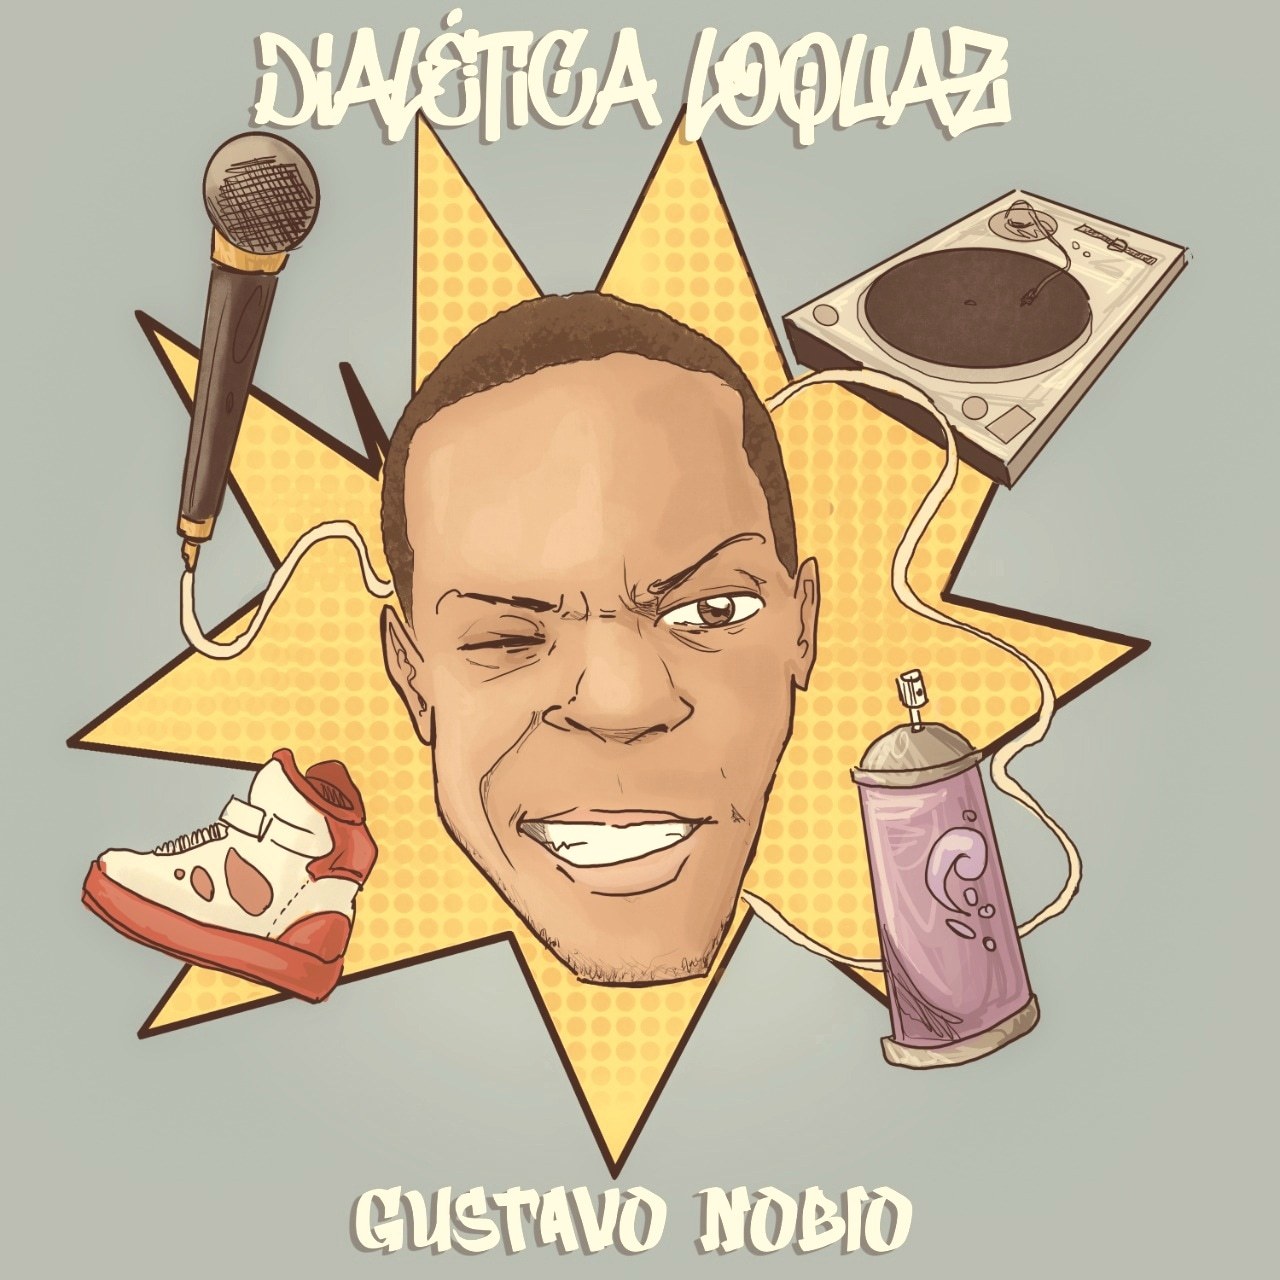 The rock, Niterói, Brasil, Gustavo Maia